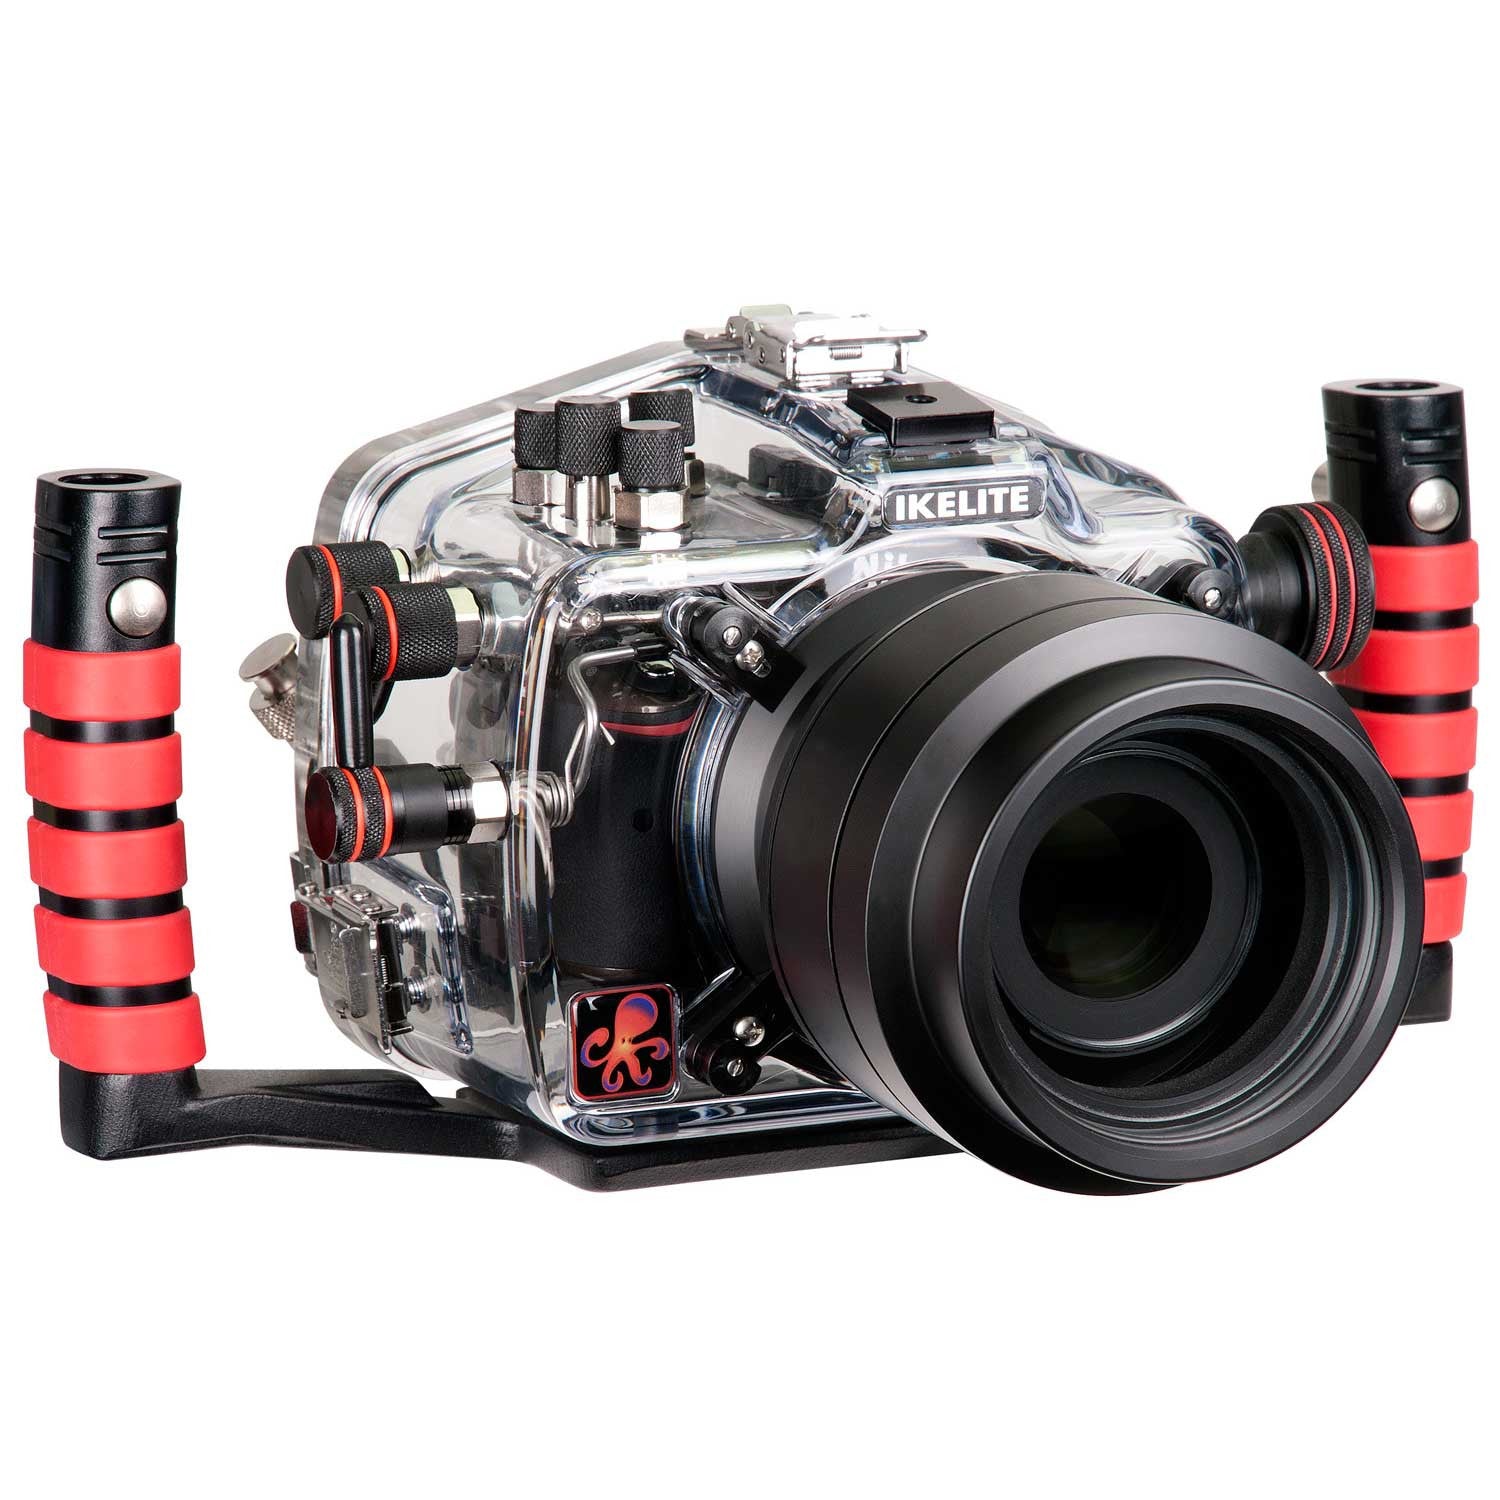 200FL Underwater TTL Housing for Nikon D5200 DSLR Cameras